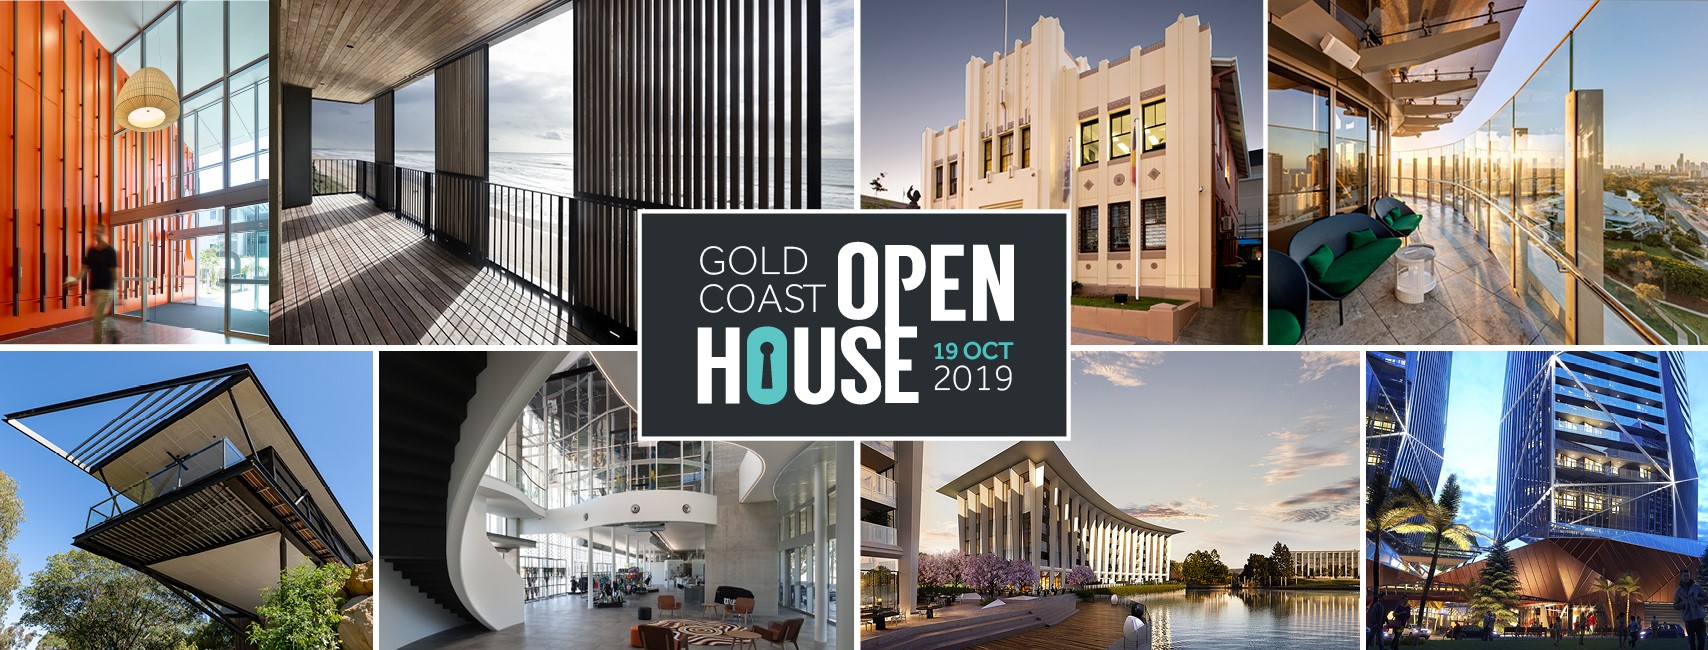 Gold Coast Open House 2019